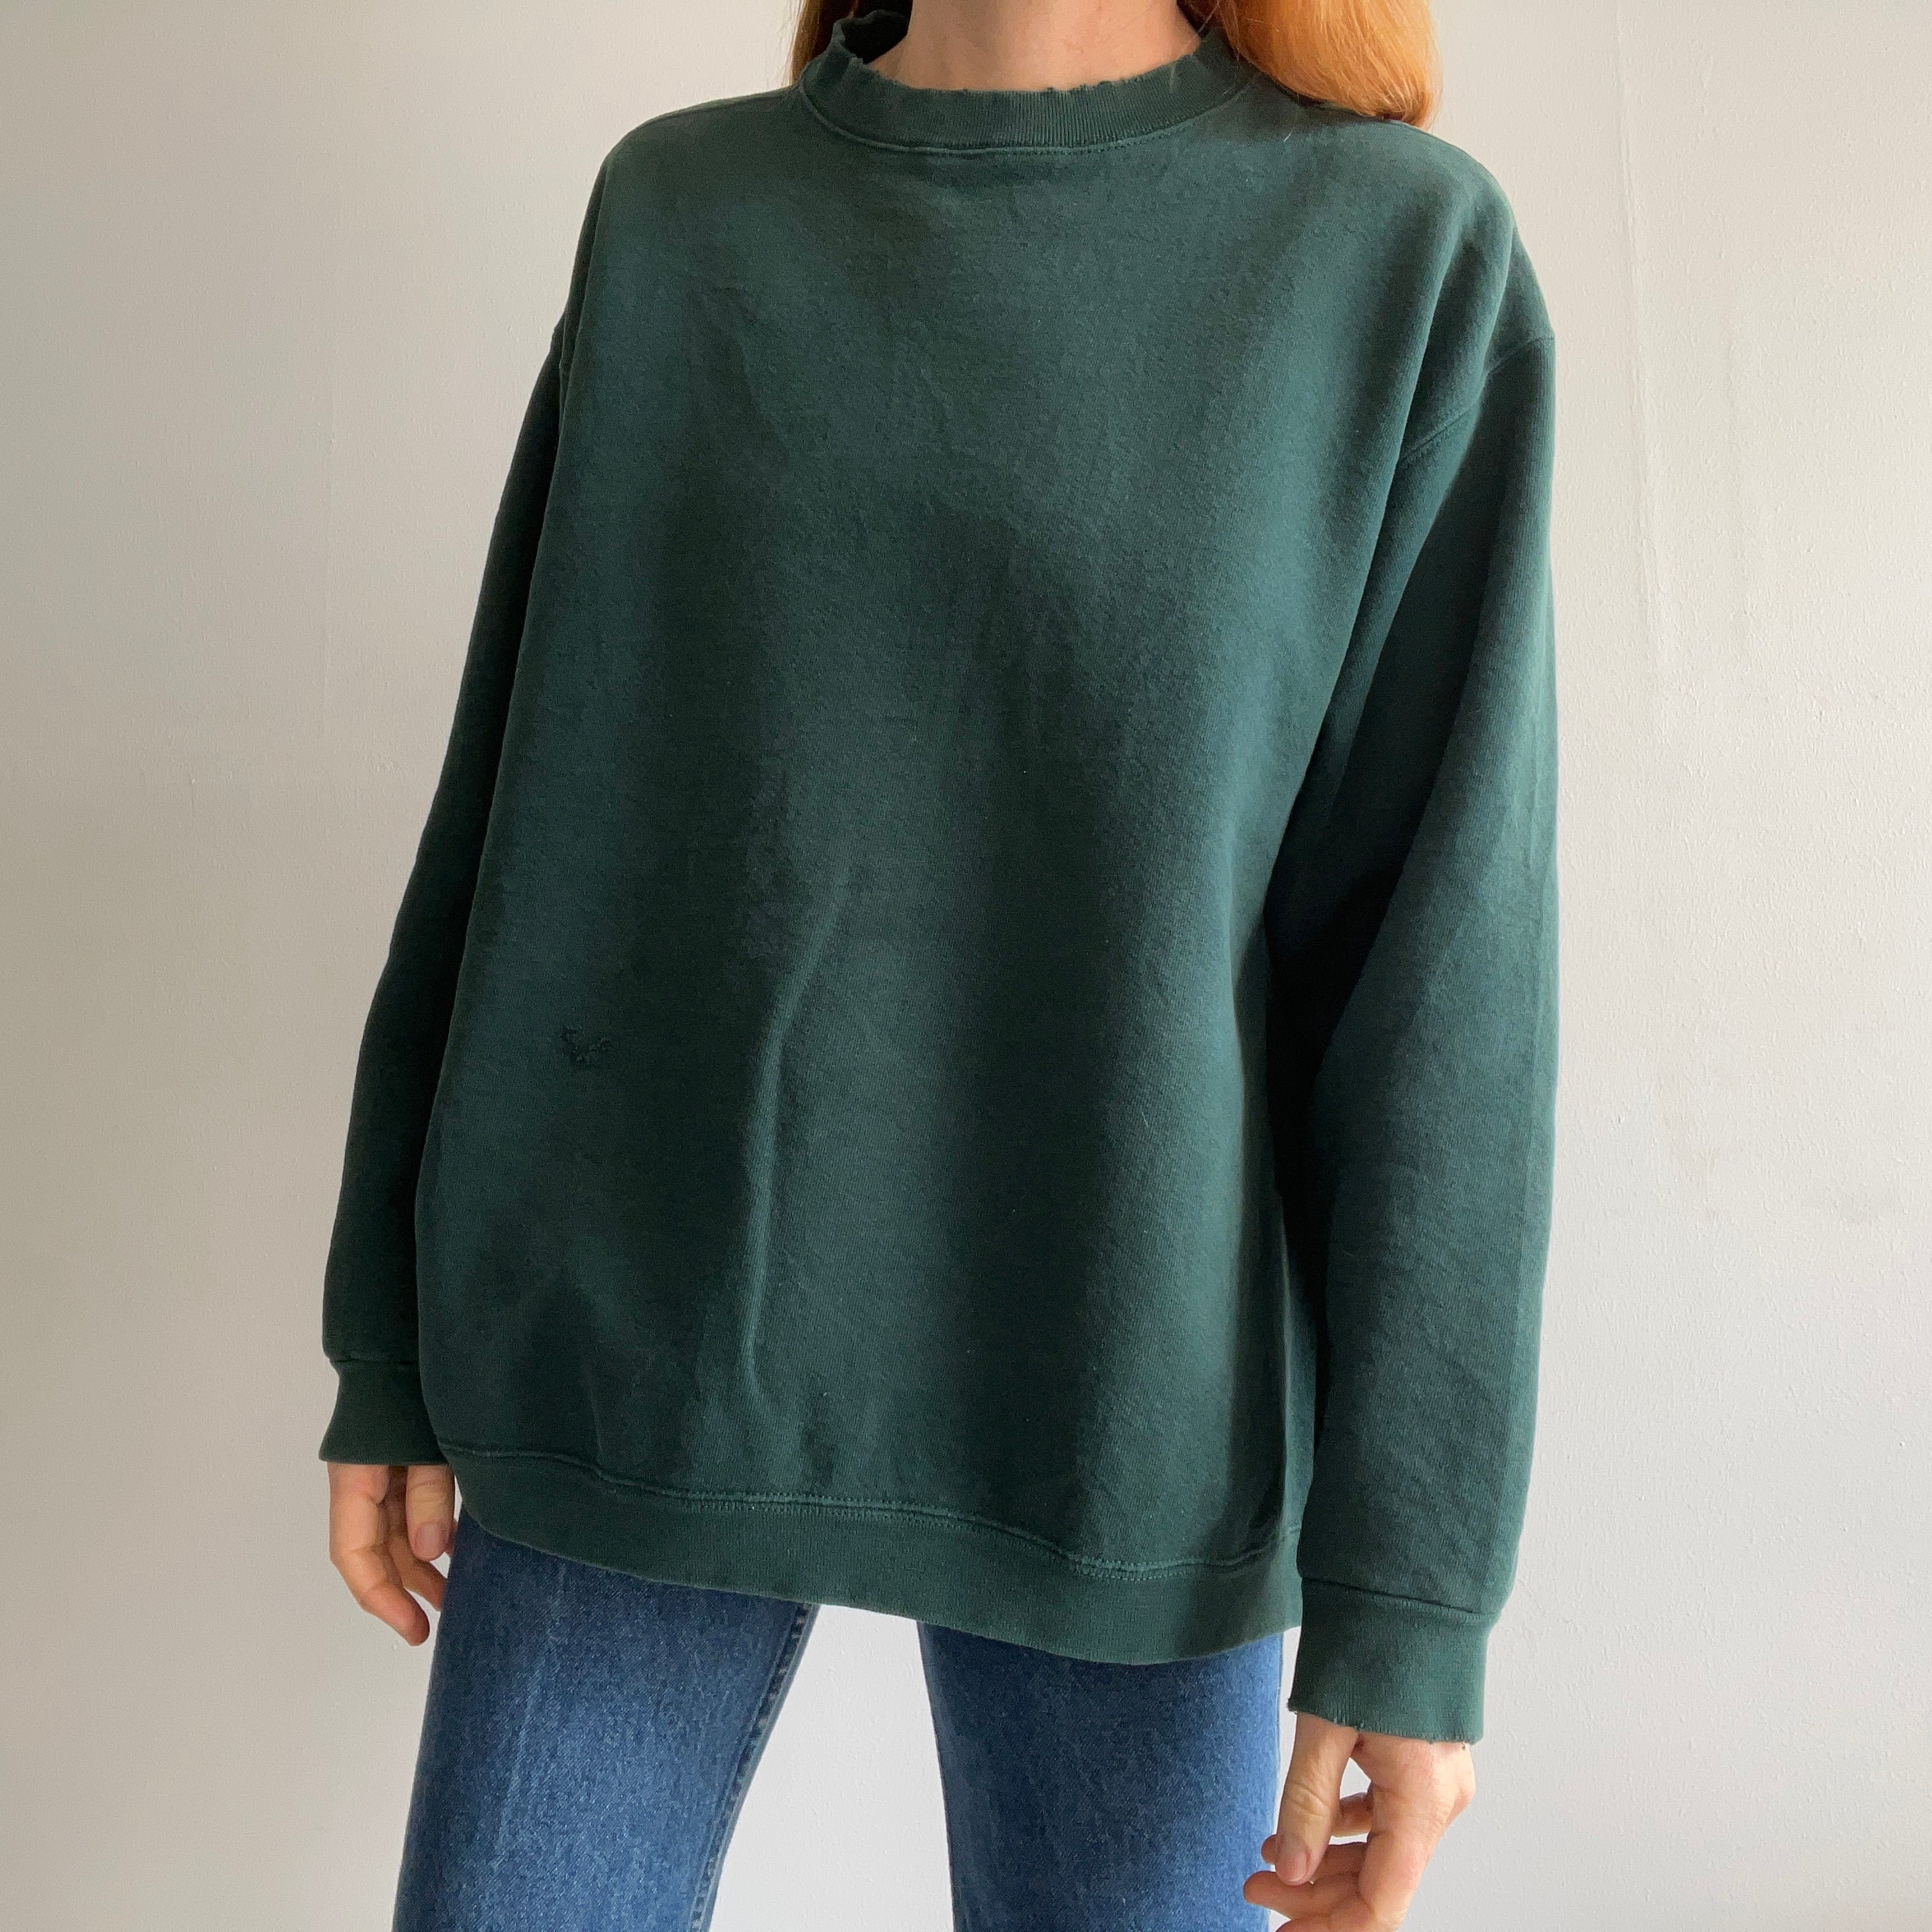 1990s Heavyweight Dark Green Sweatshirt with Mending